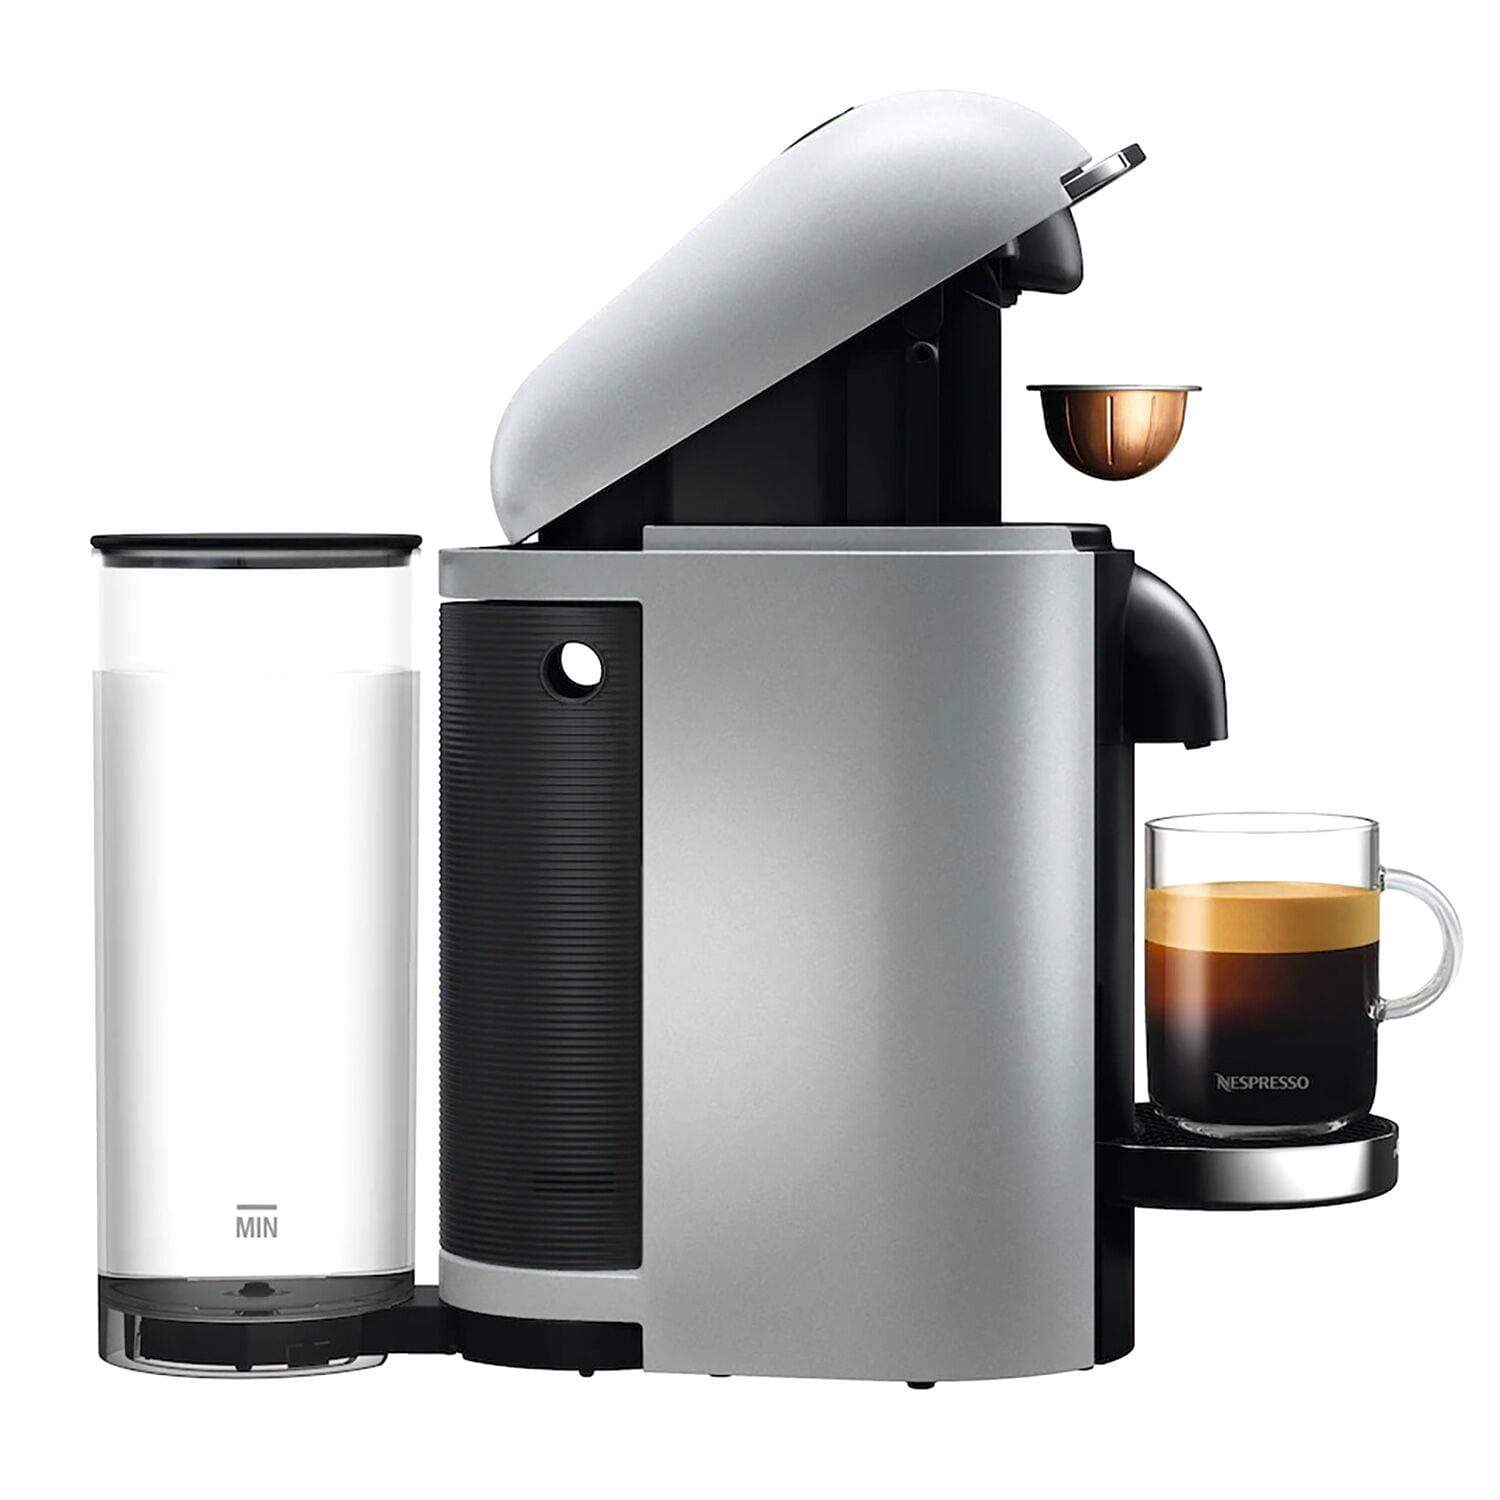 Nespresso ماكينة صنع القهوة Vertuo Plus - فضي ديلوكس وأسود هوائي - GCB2-BU-SI - Jashanmal Home